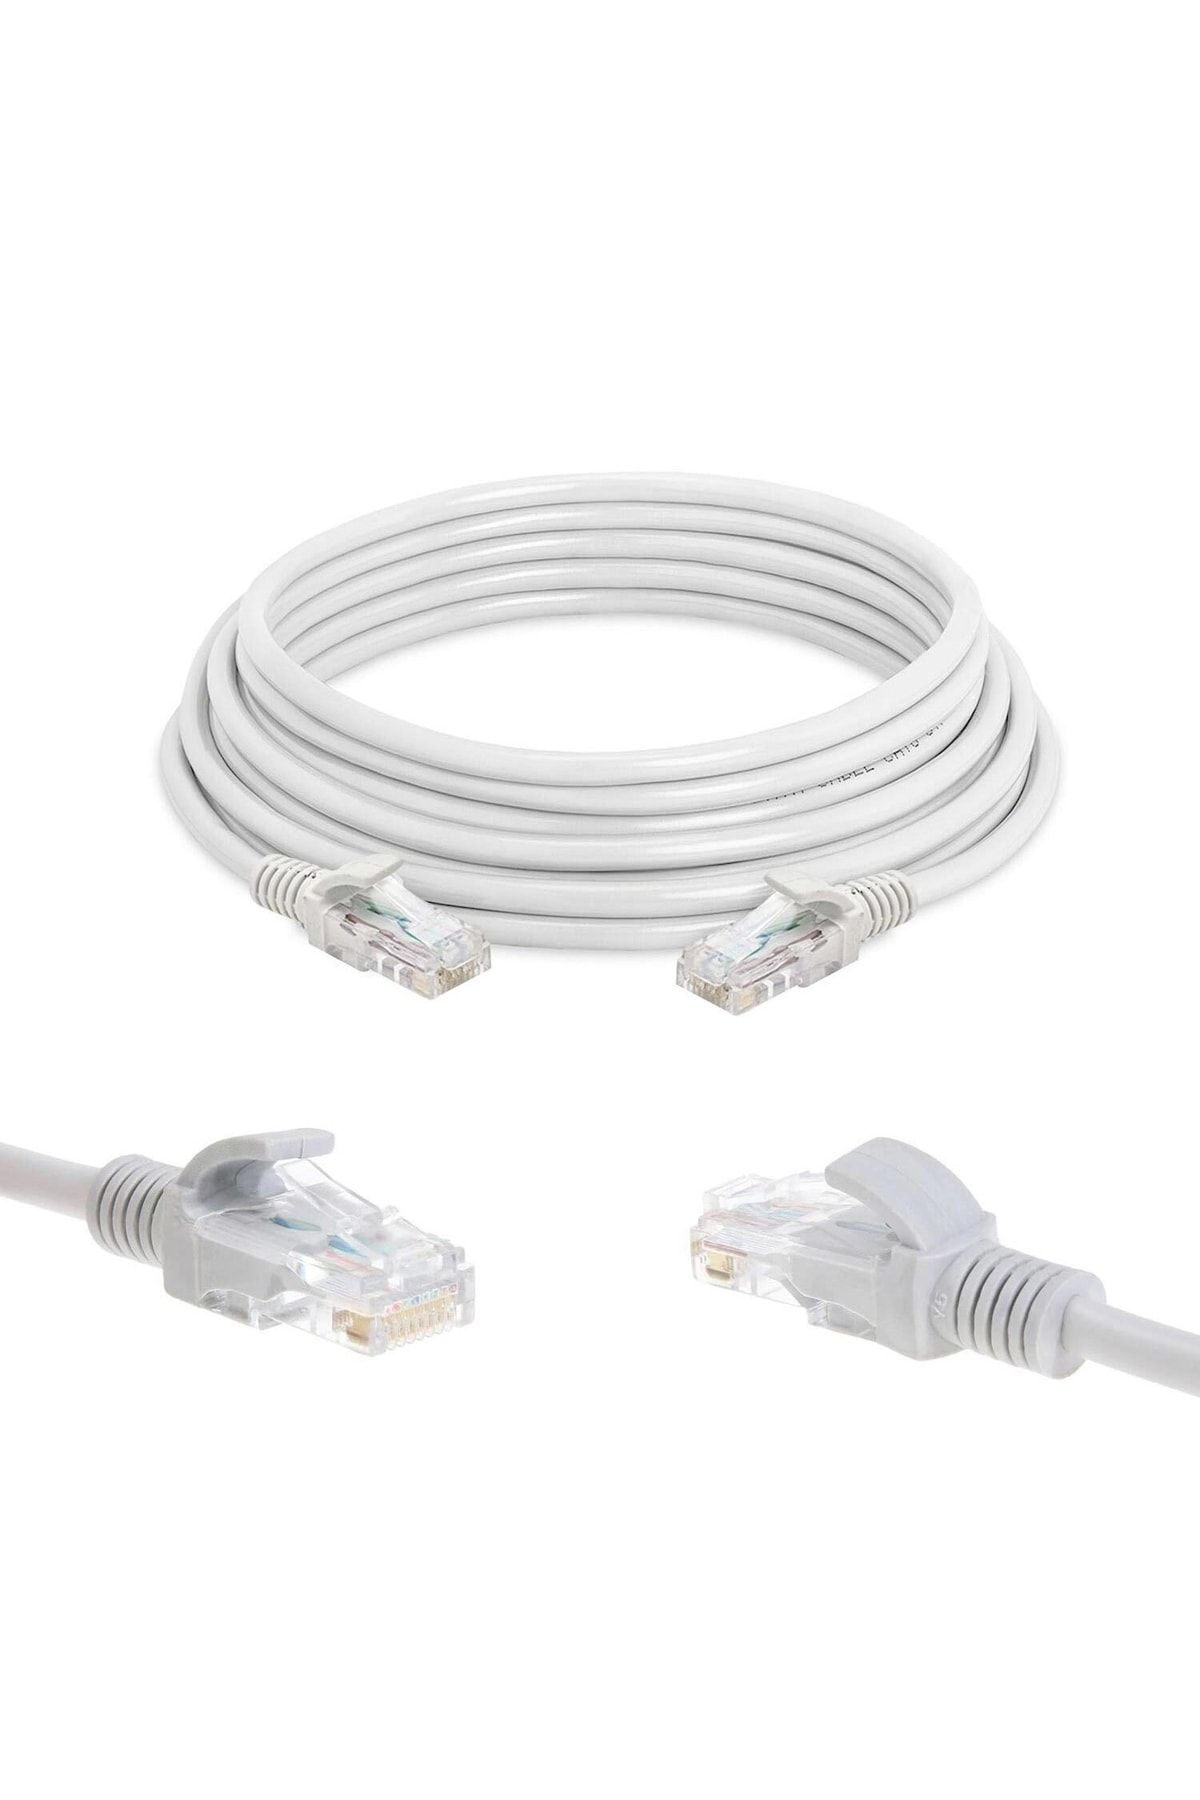 Genel Markalar Lucestxdn Cat6 Patch Network Ethernet Kablo 20Mt  Hn-4554/hdx-5003 New